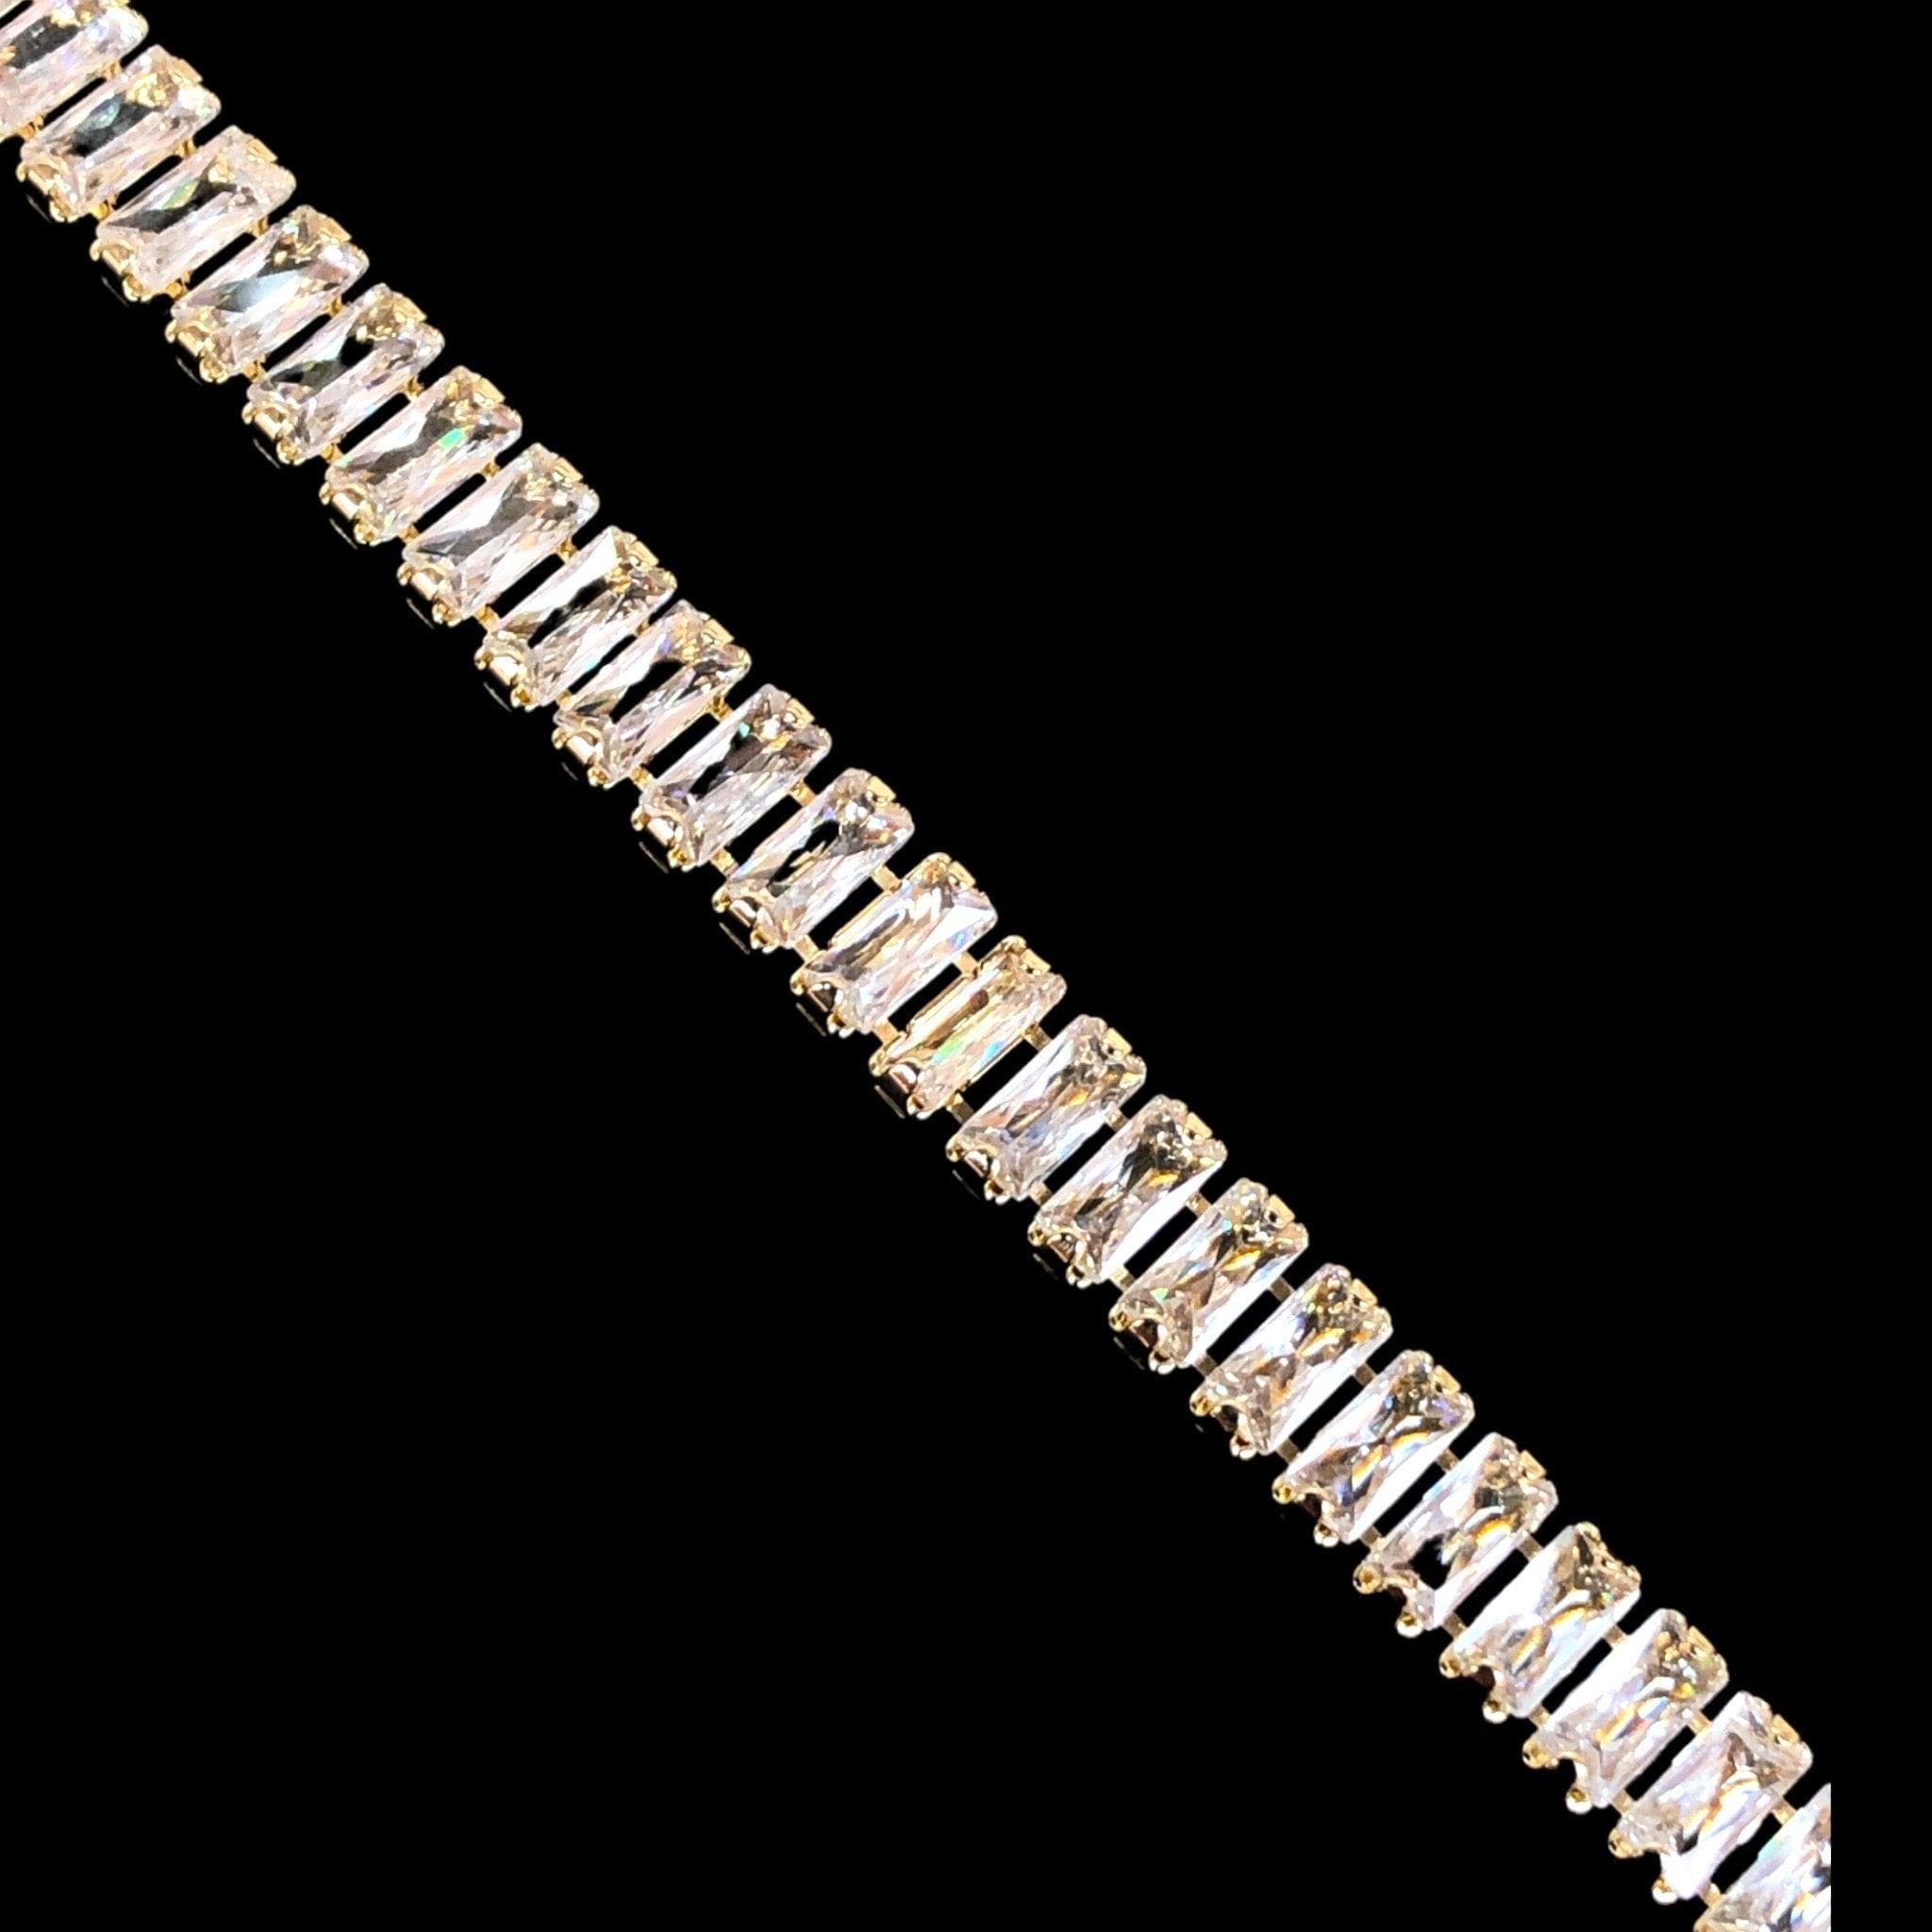 18k Gold-Filled Baguette CZ Tennis Bracelet- kuania oro laminado